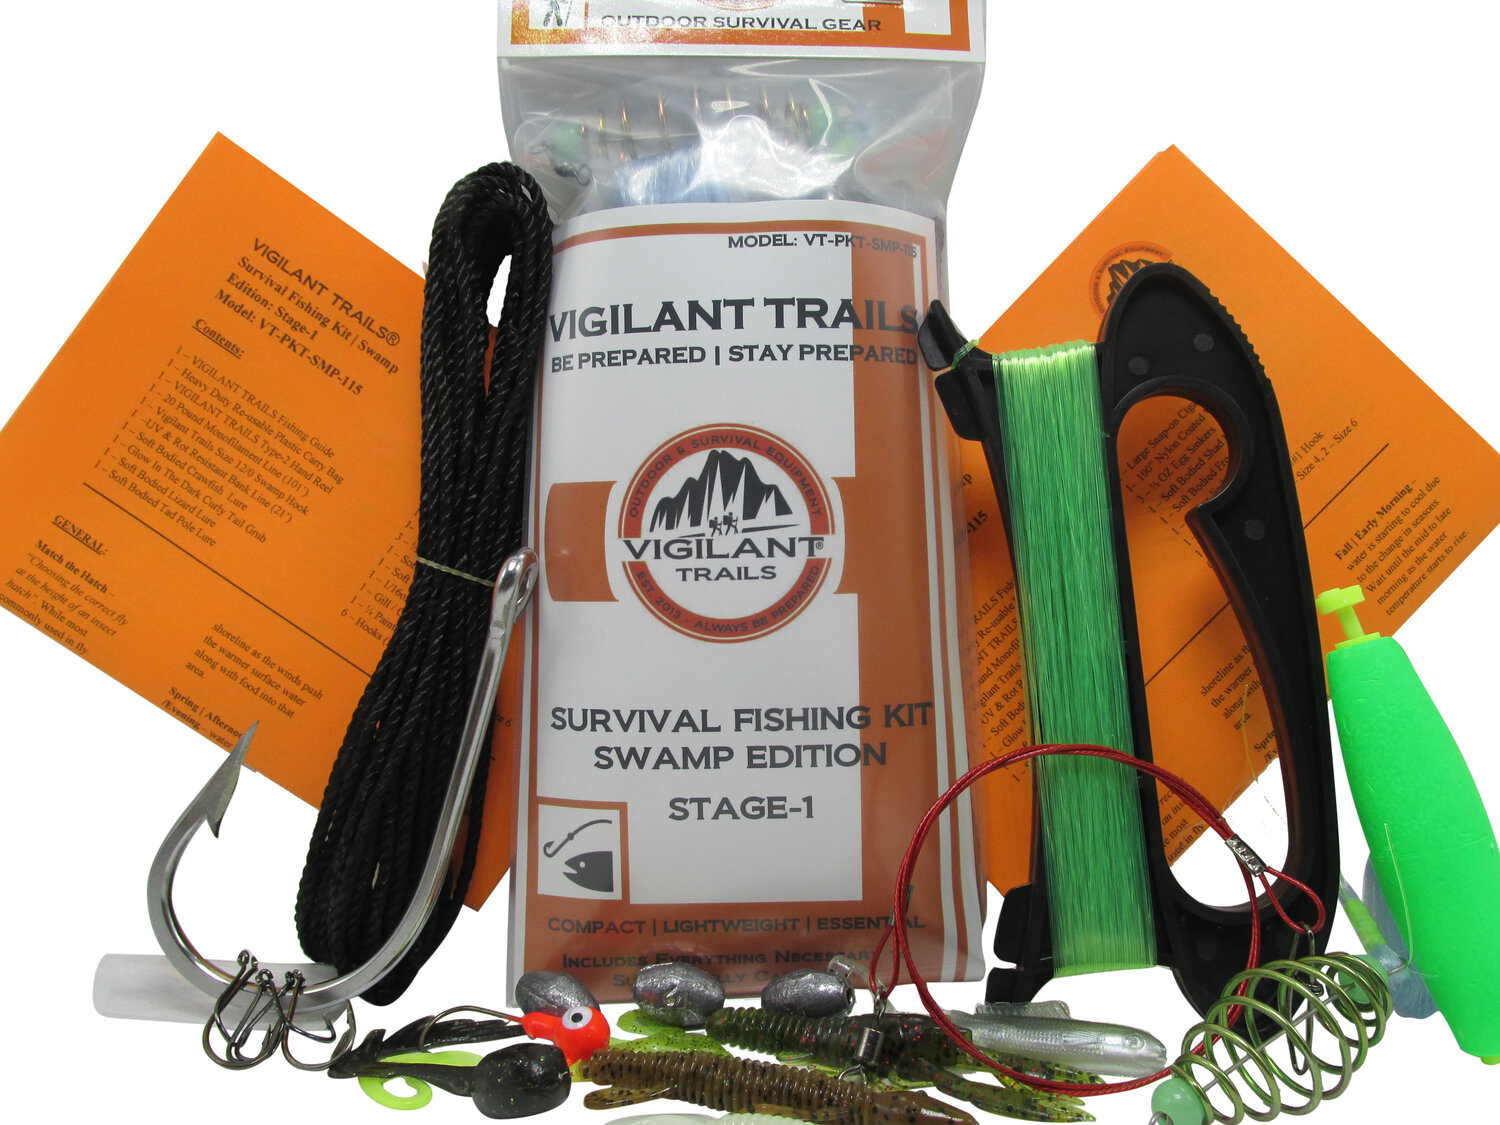 Vigilant Trails® Pre-Packed Survival Fishing Kit Swamp Edition